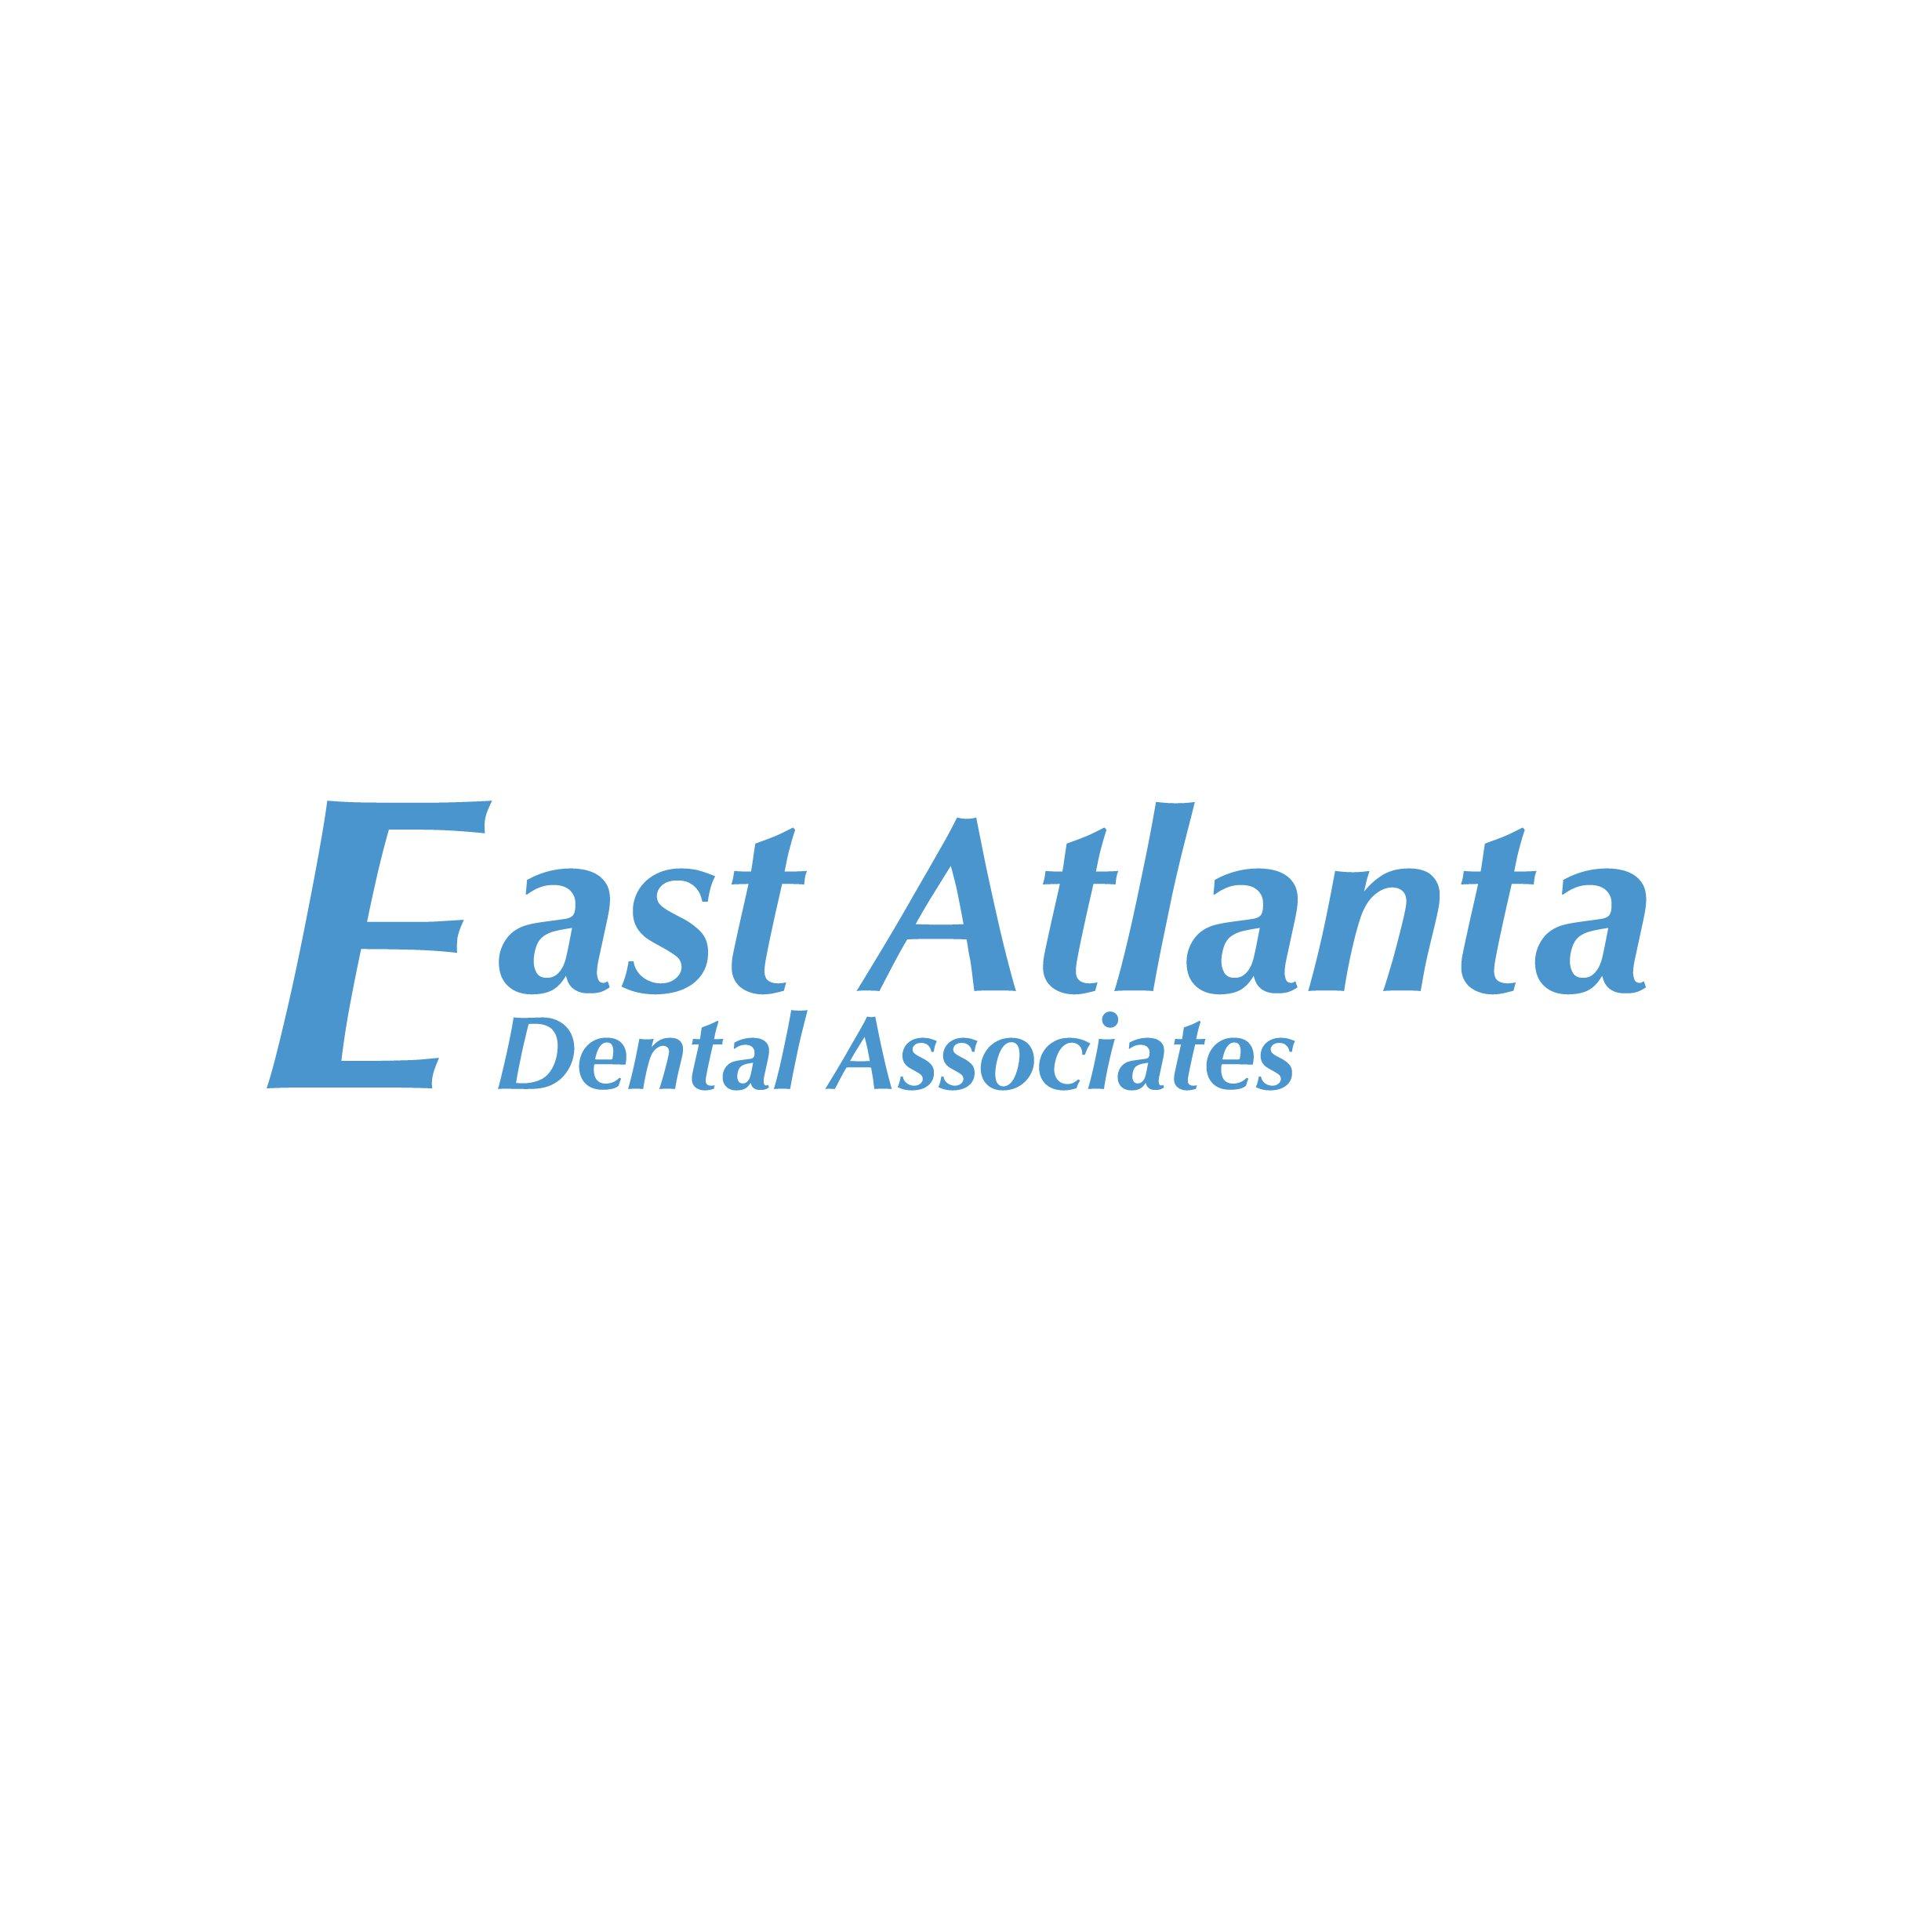 East Atlanta Dental Associates